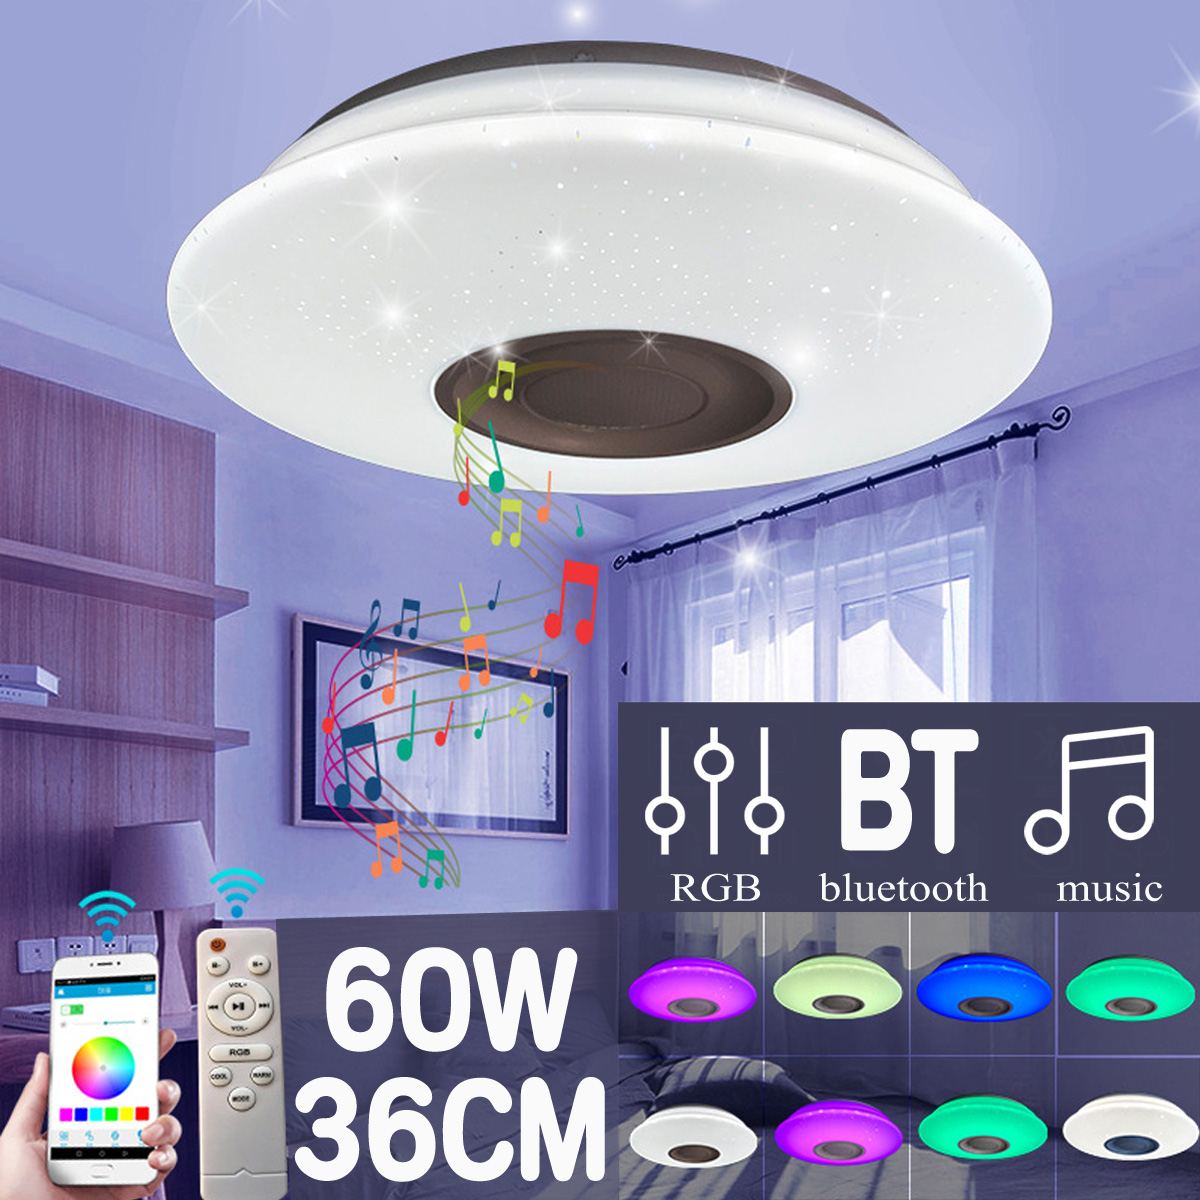 110-220V-60W-LED-Music-Ceiling-Light-RGB-Bluetooth-Remote-Control-Smart-Lamp-1704934-1